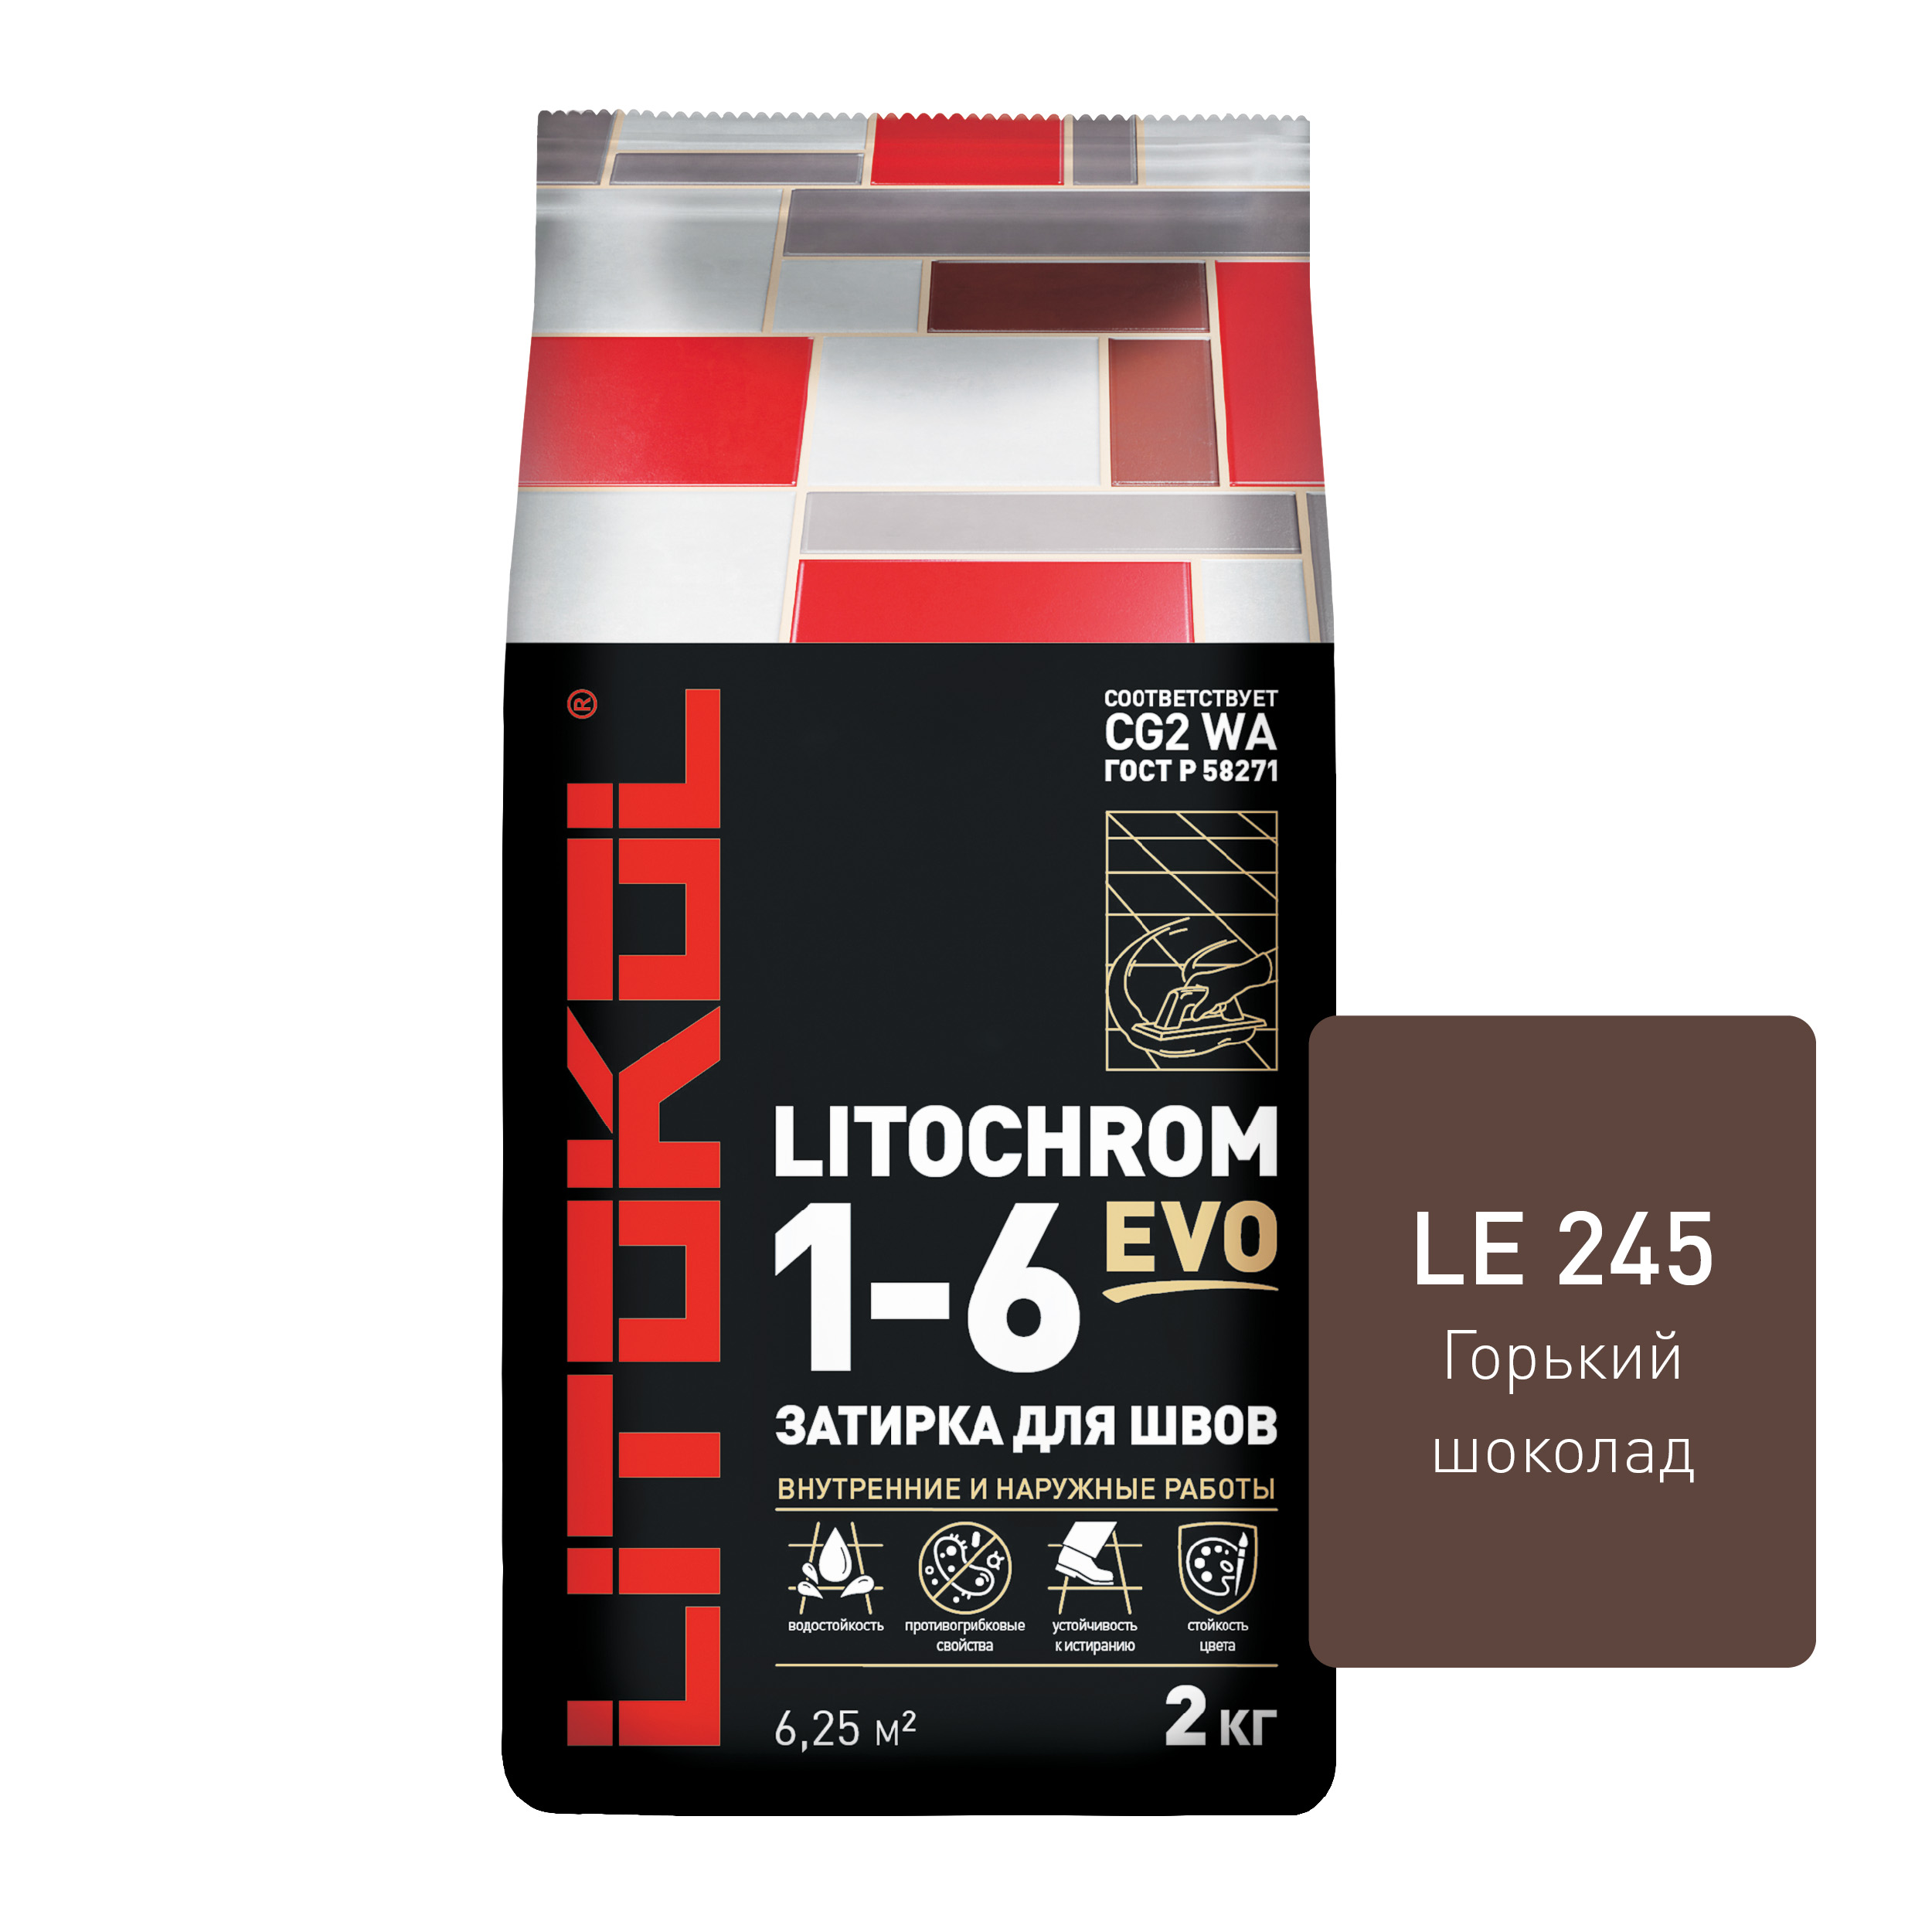 фото Цементная затирка litokol litochrom 1-6 evo le.245 горький шоколад, 2 кг